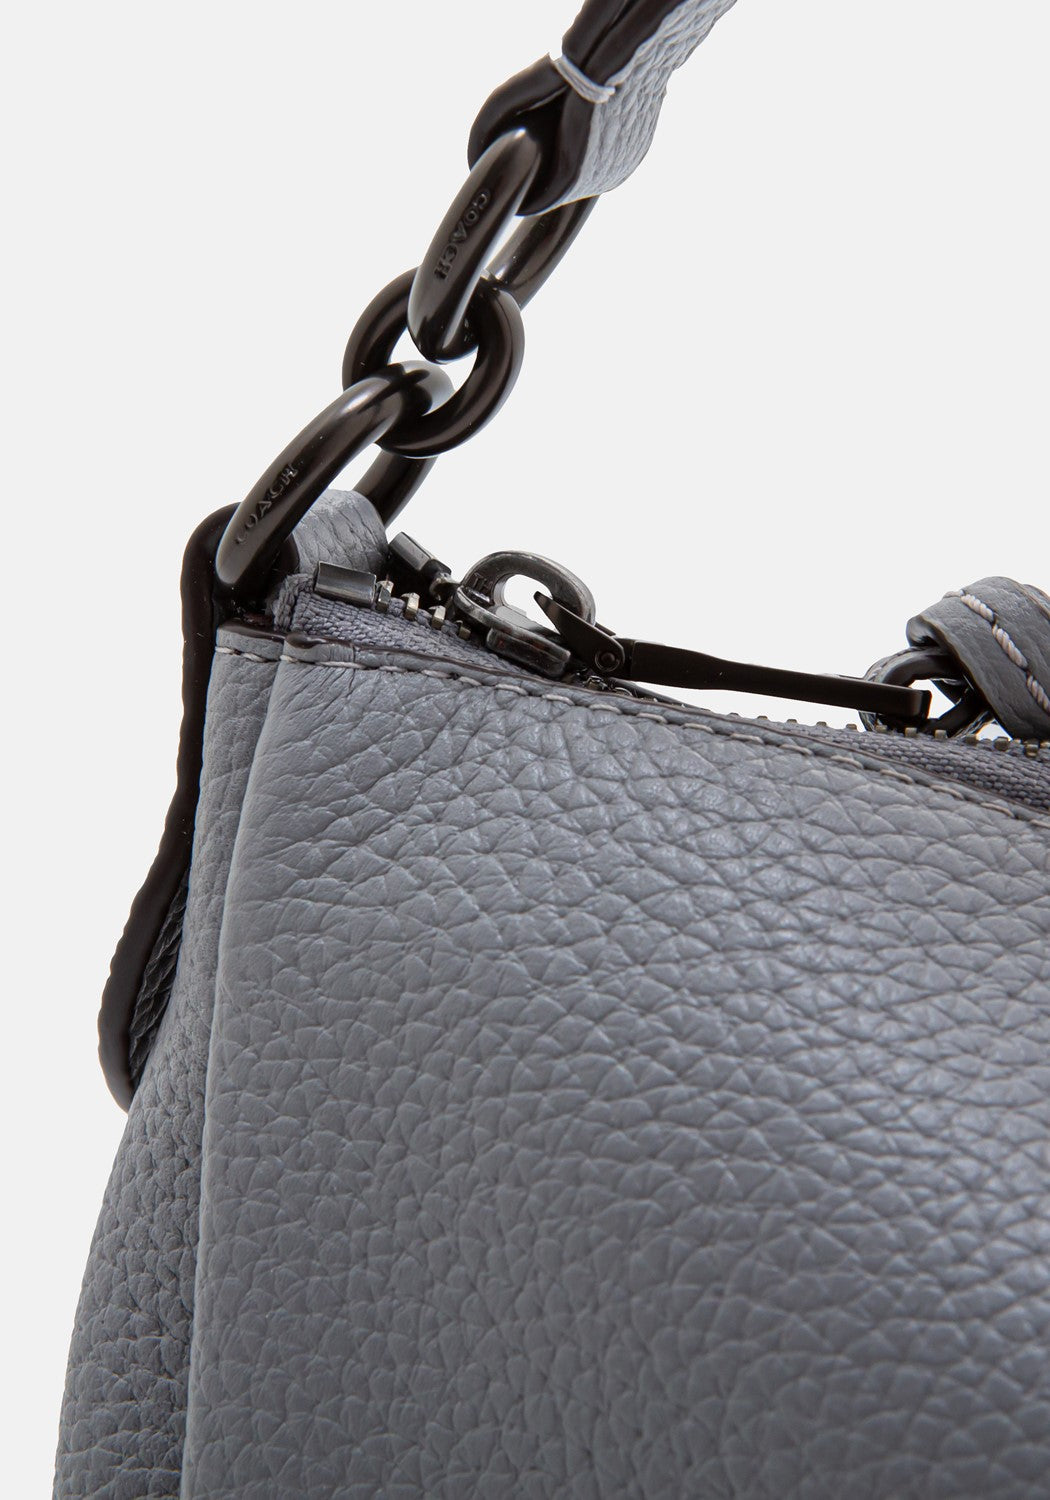 Soft Pebbple Leather Shay granite | Bildmaterial bereitgestellt von SHOES.PLEASE.